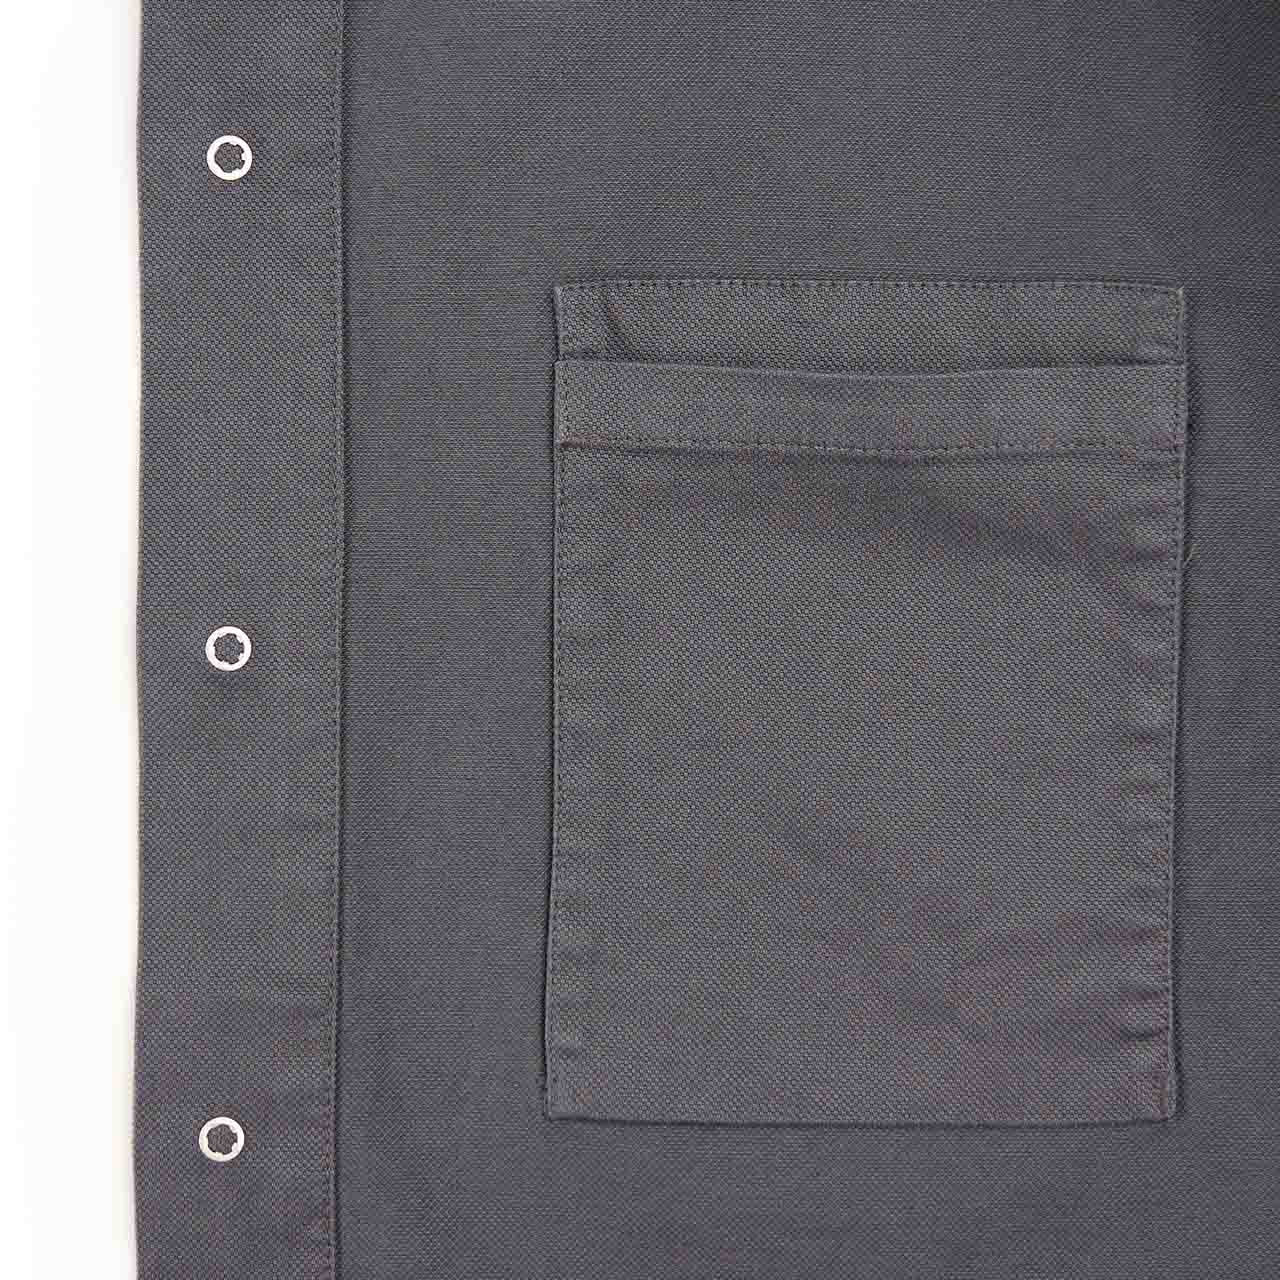 affxwrks wrks jacket (grau)